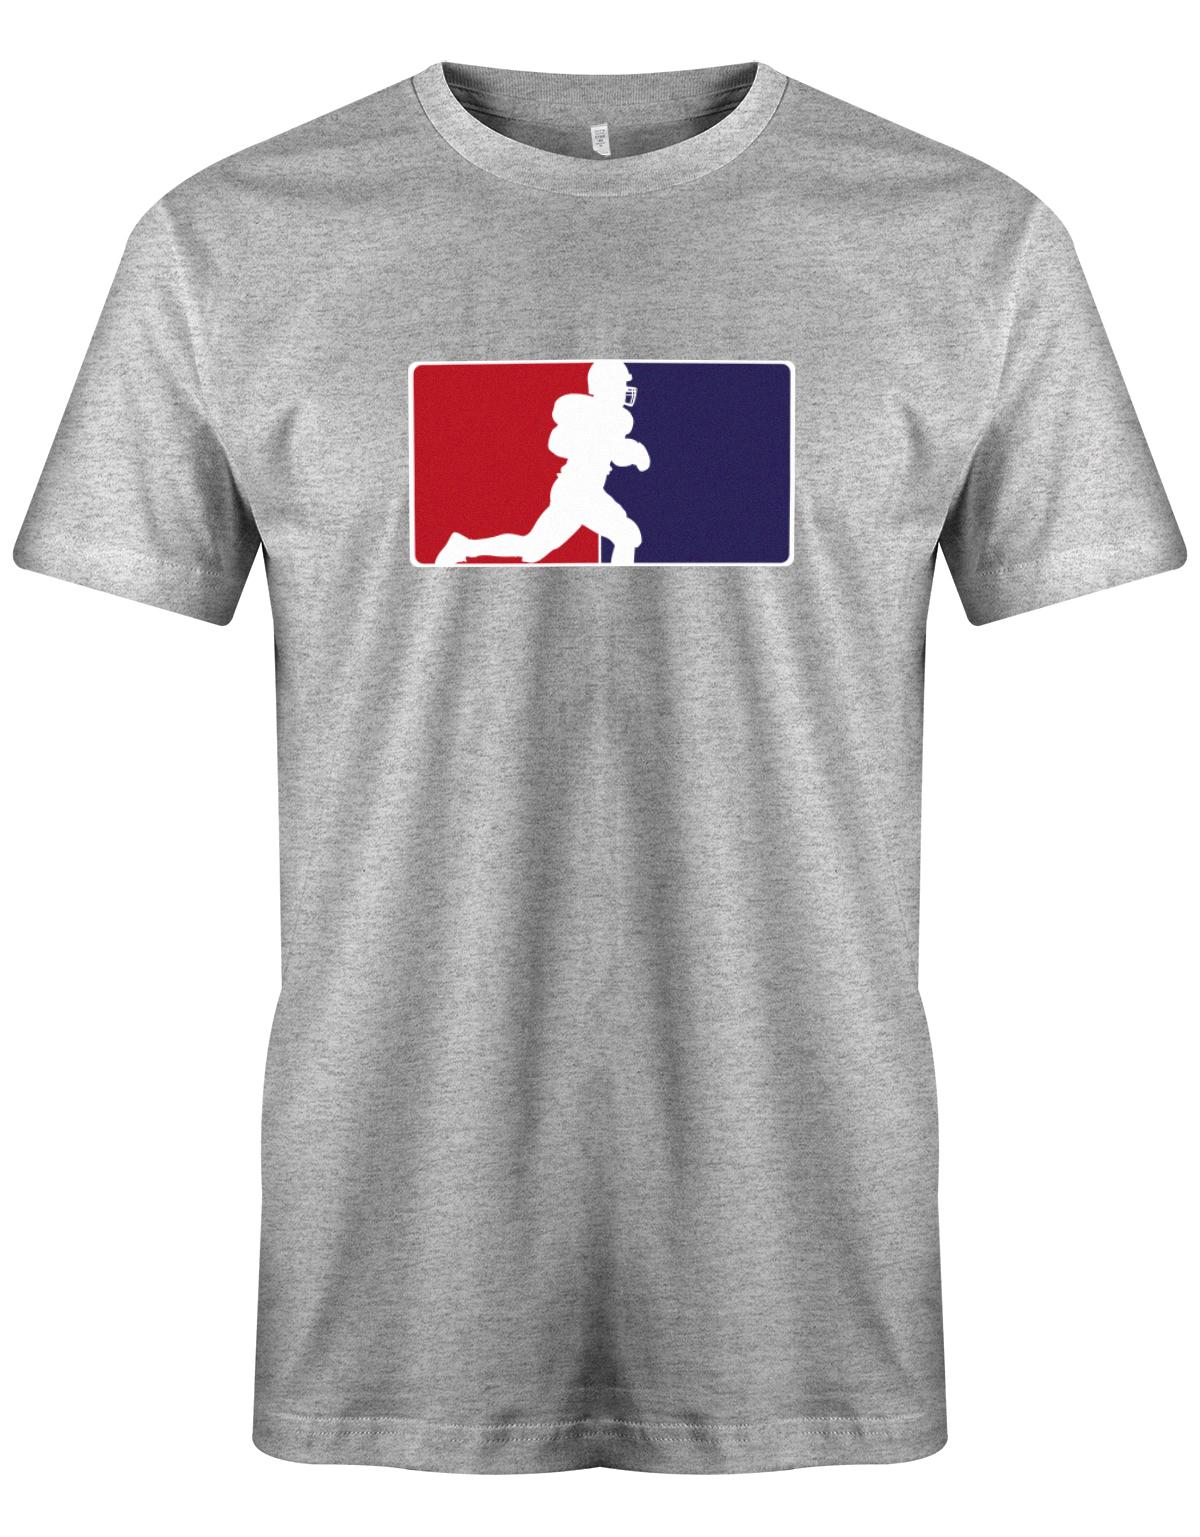 Football-Logo-Herren-Shirt-Grau